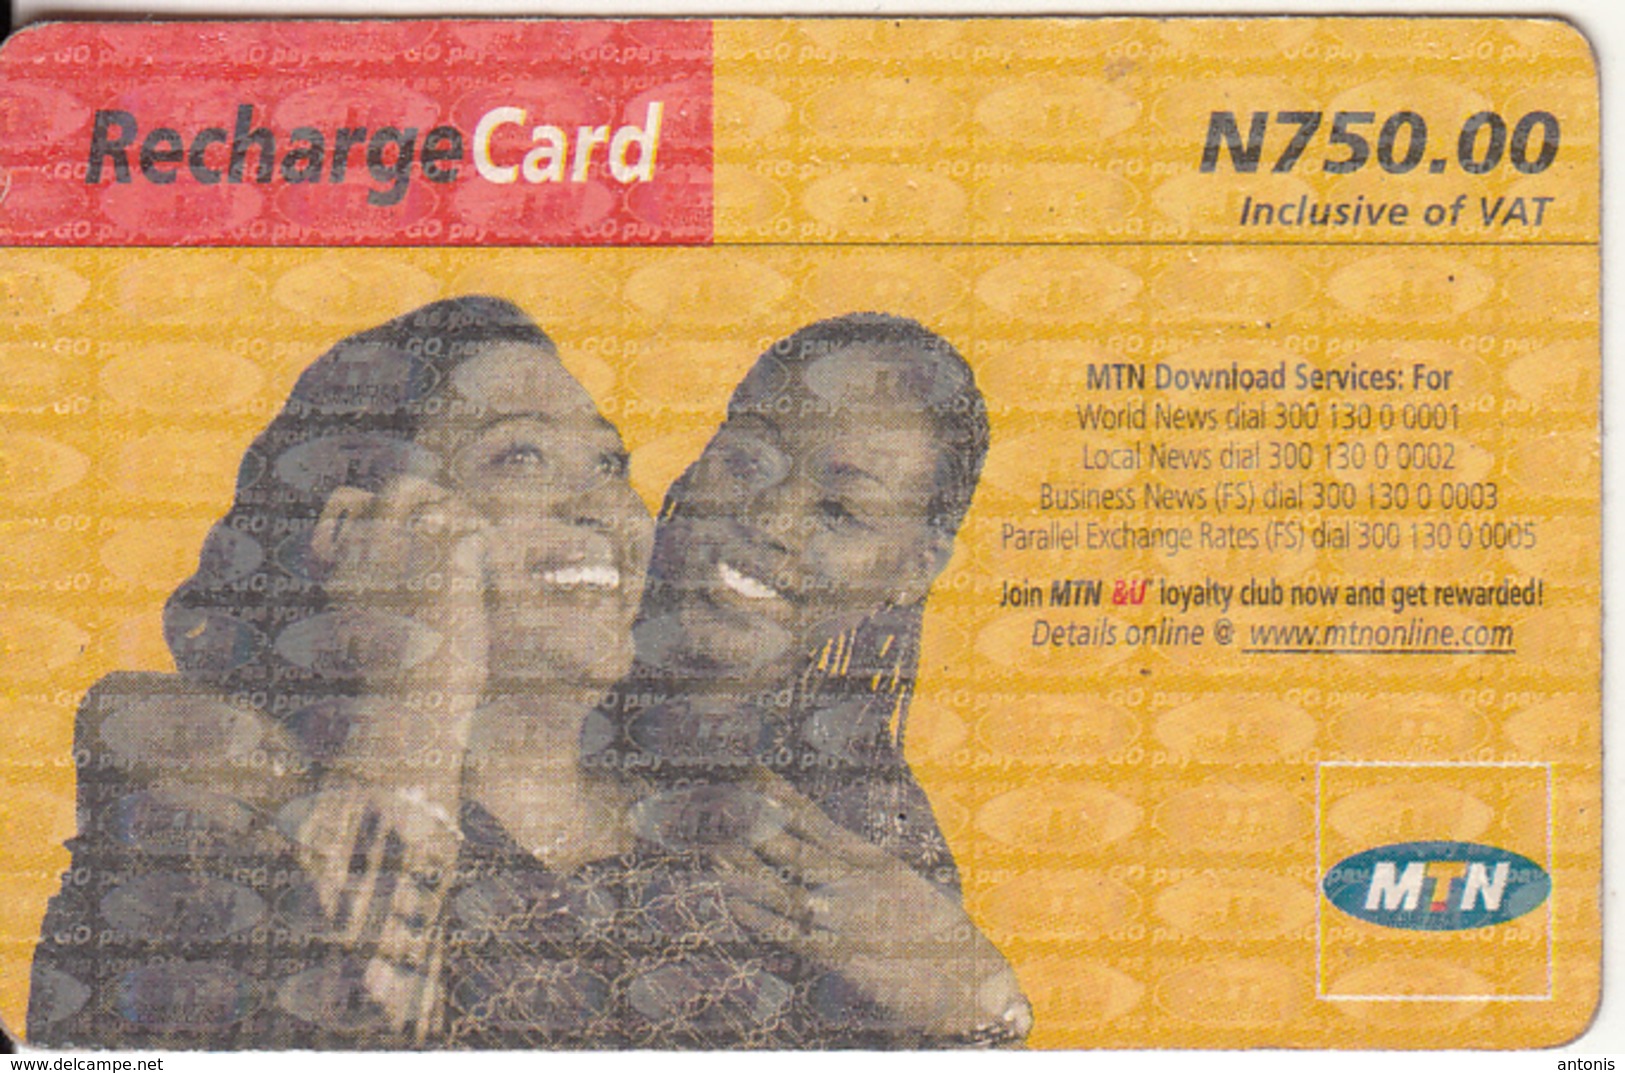 NIGERIA - 2 Girls On Phone, MTN Recharge Card N 750, Used - Nigeria